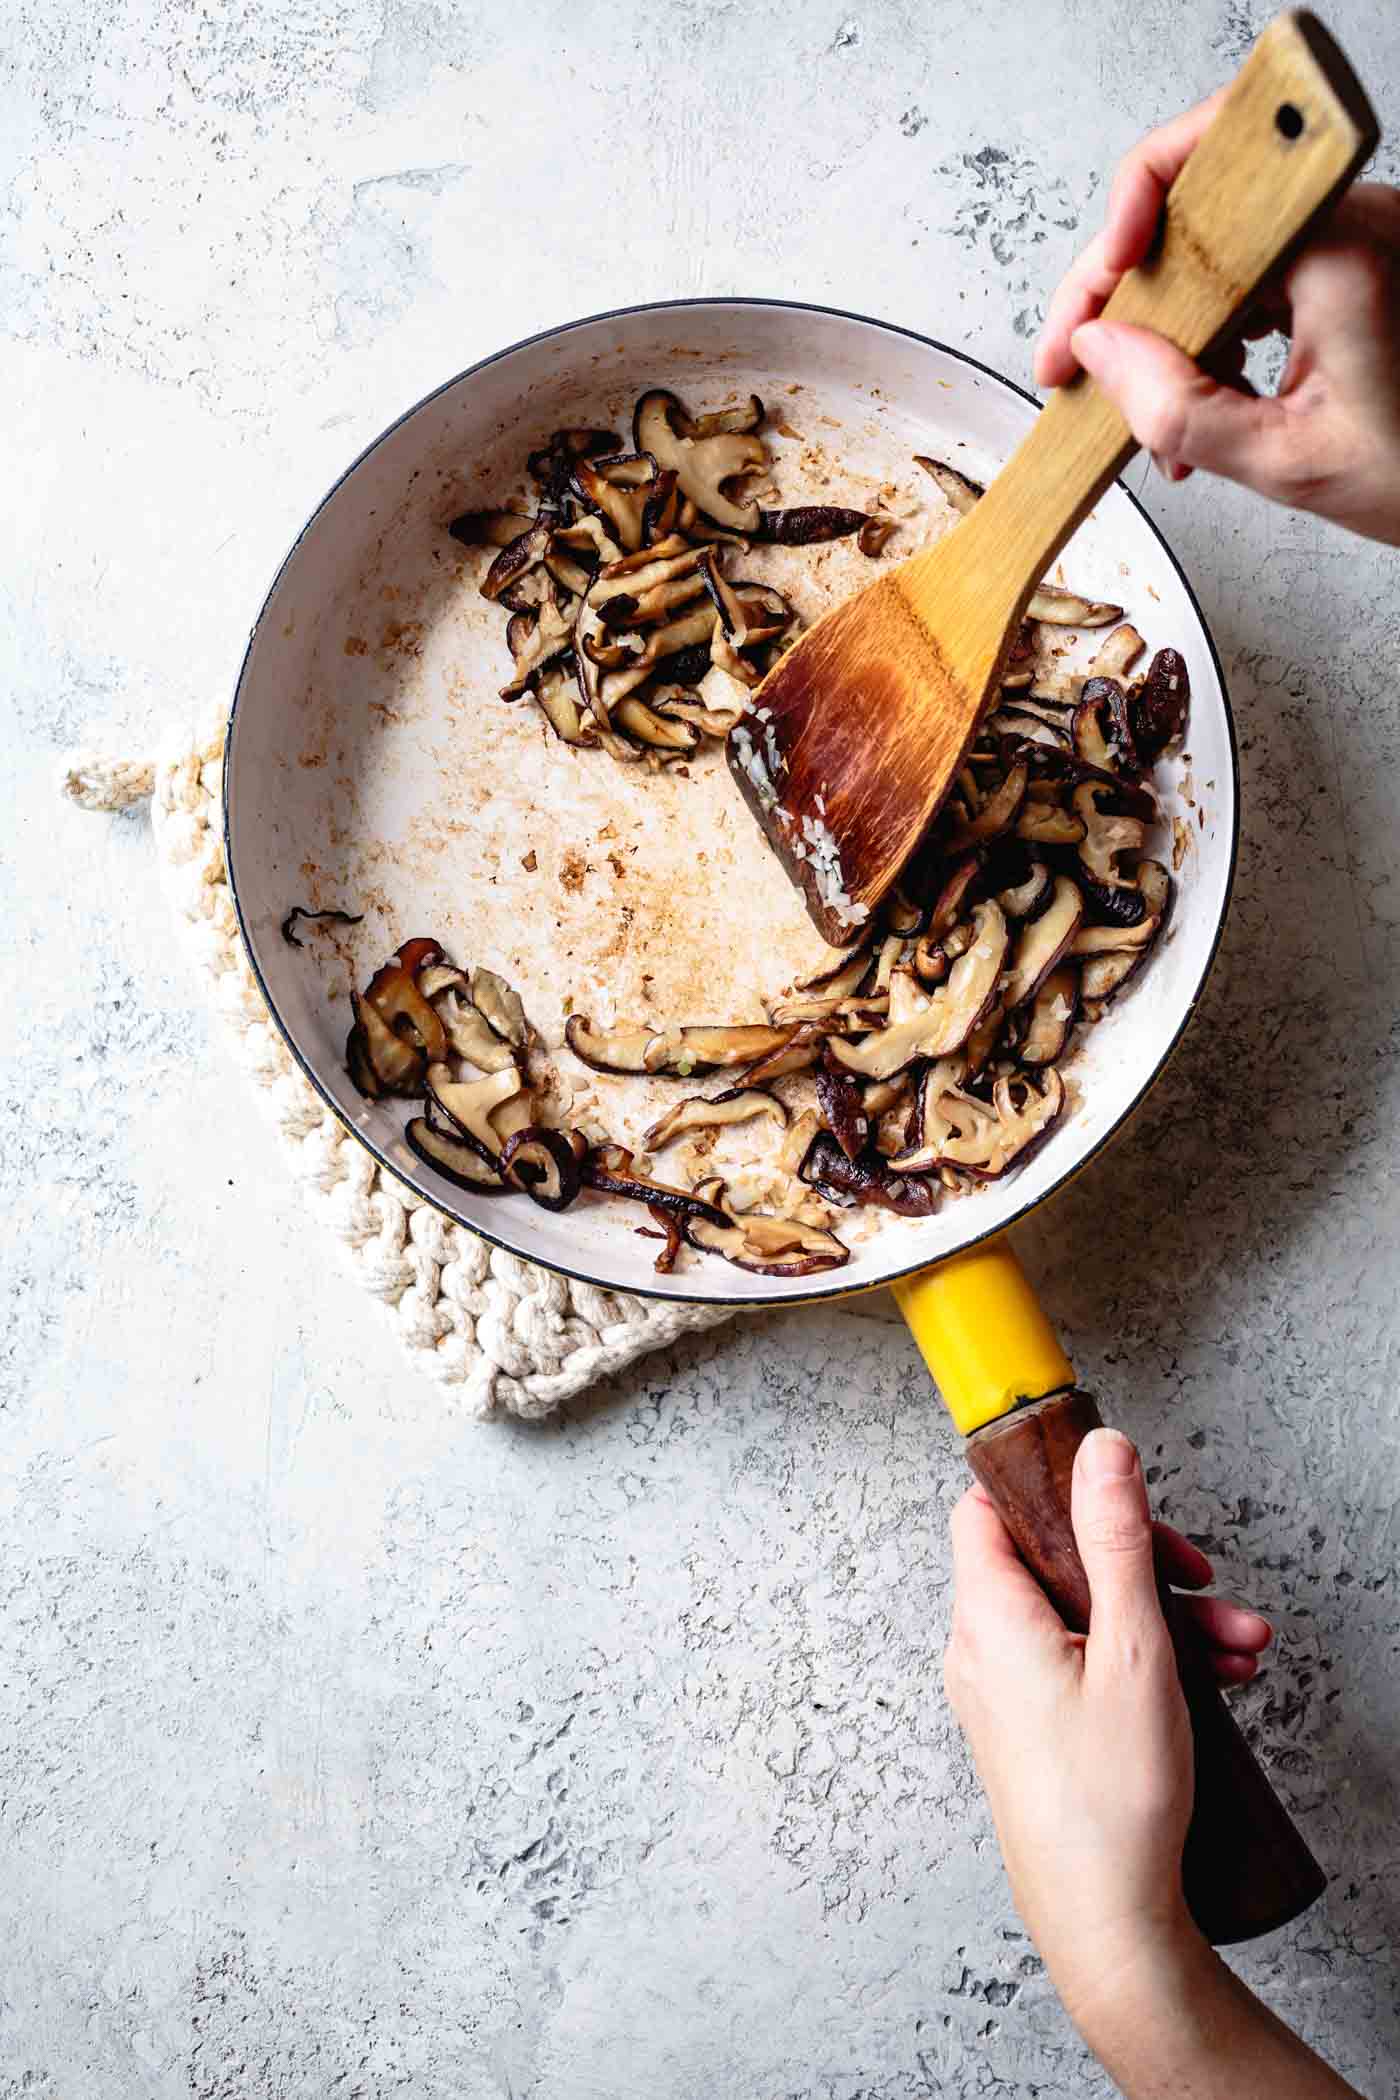 Making gluten-free mushroom gravy recipe - cooking the mushrooms in butter 